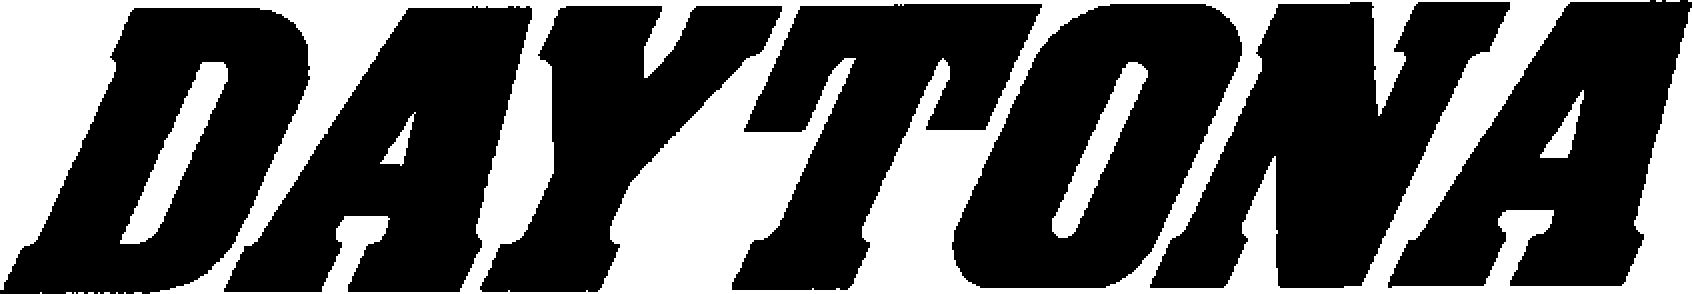 Trademark Logo DAYTONA